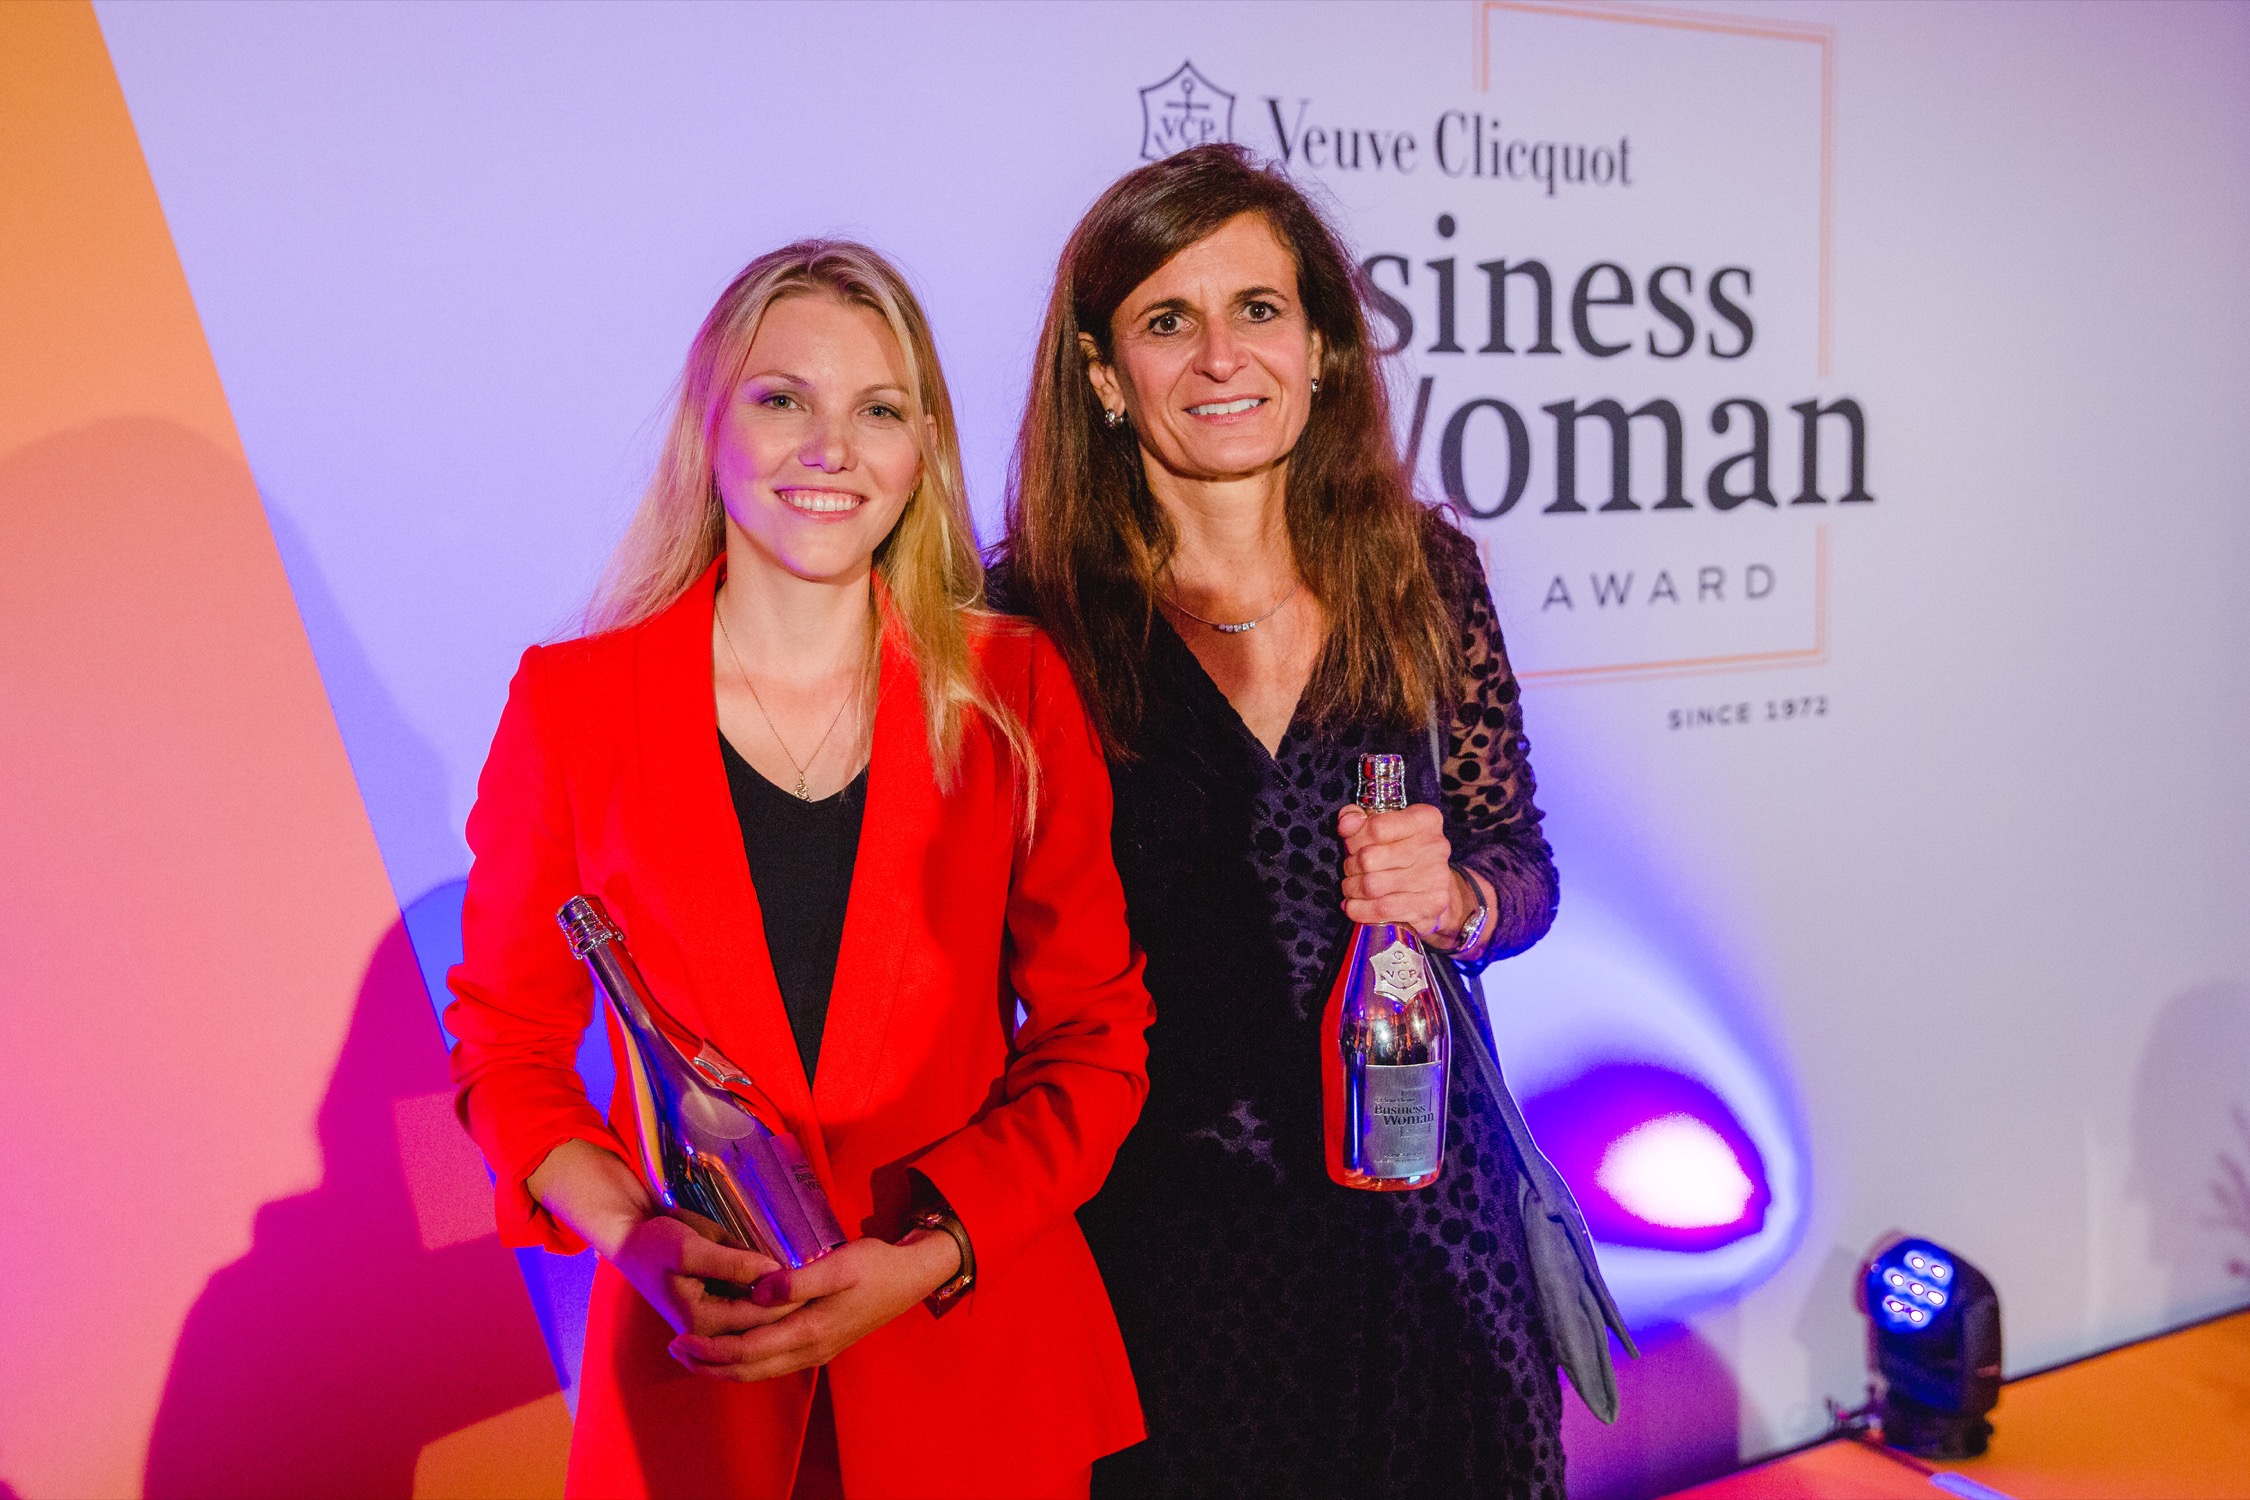 Veuve Clicquot Business Woman Award 2019